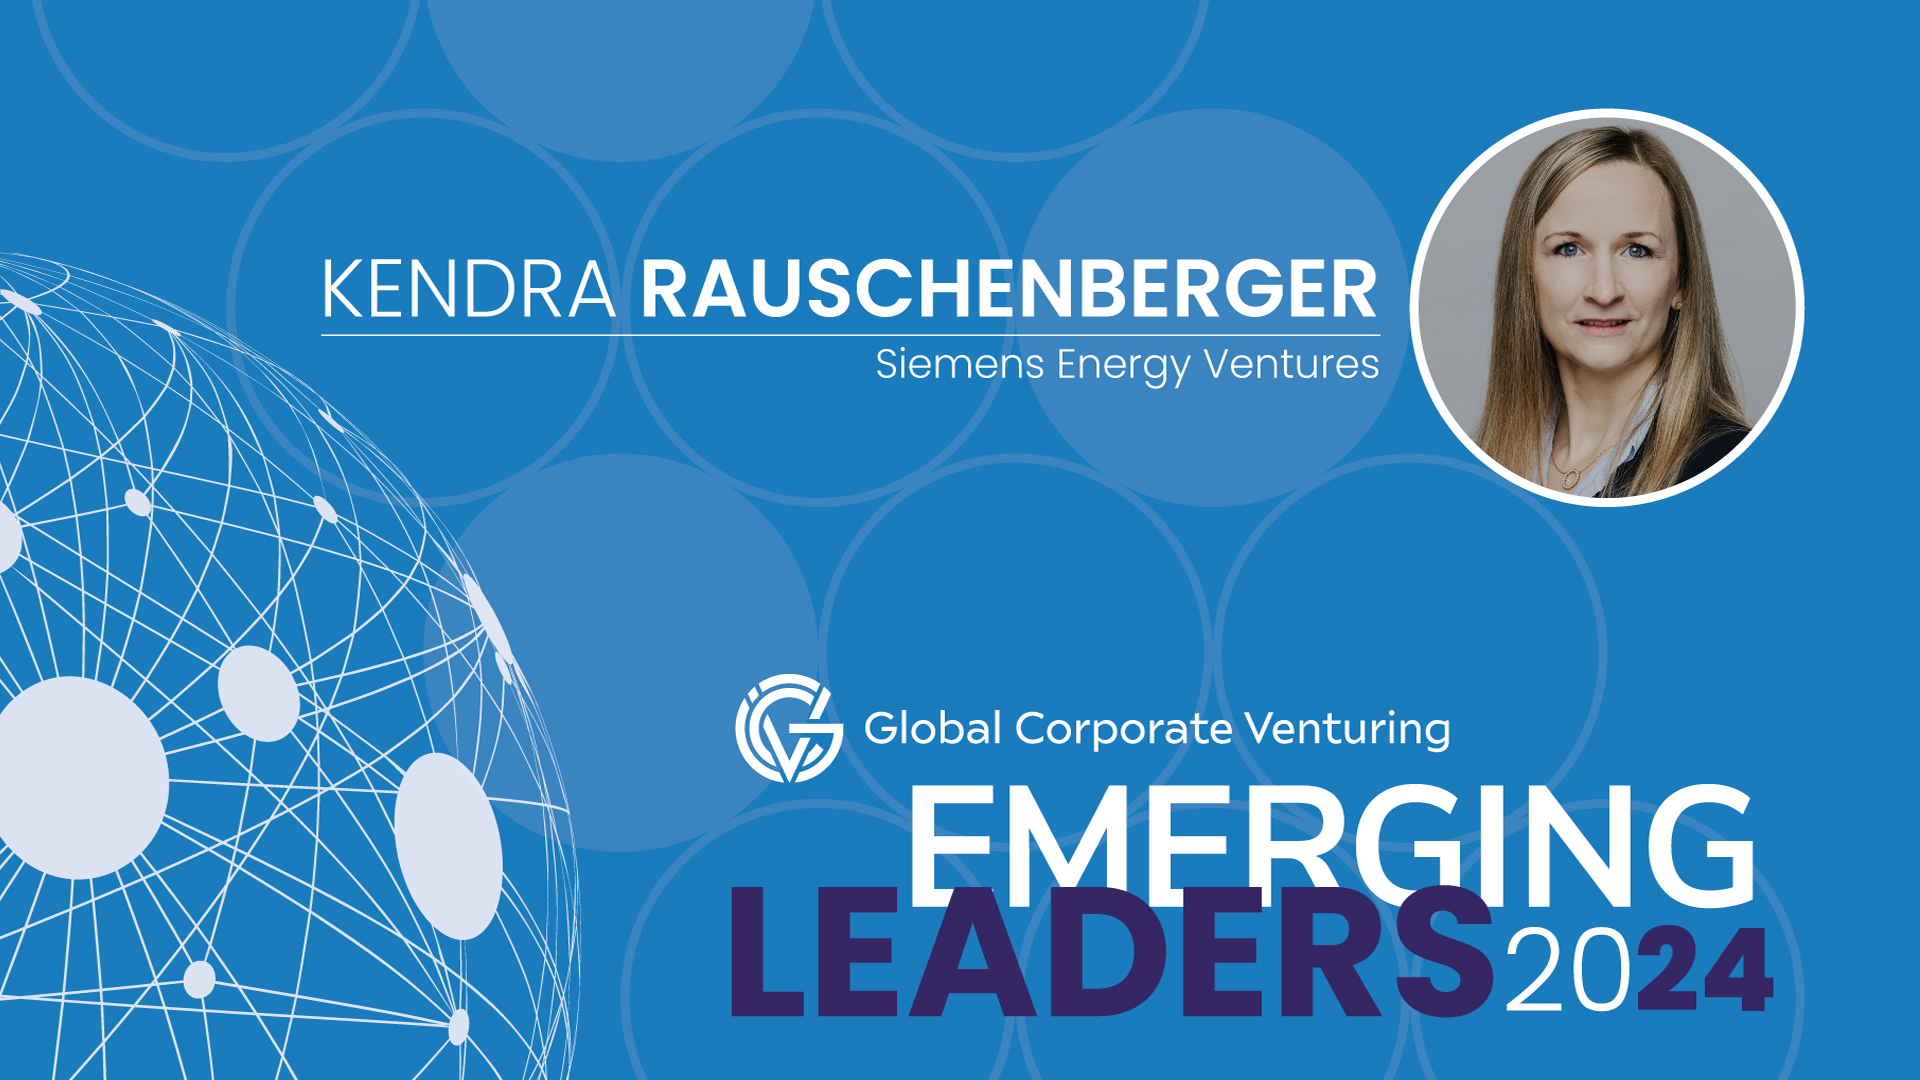 Kendra Rauschenberger, Siemens Energy Ventures